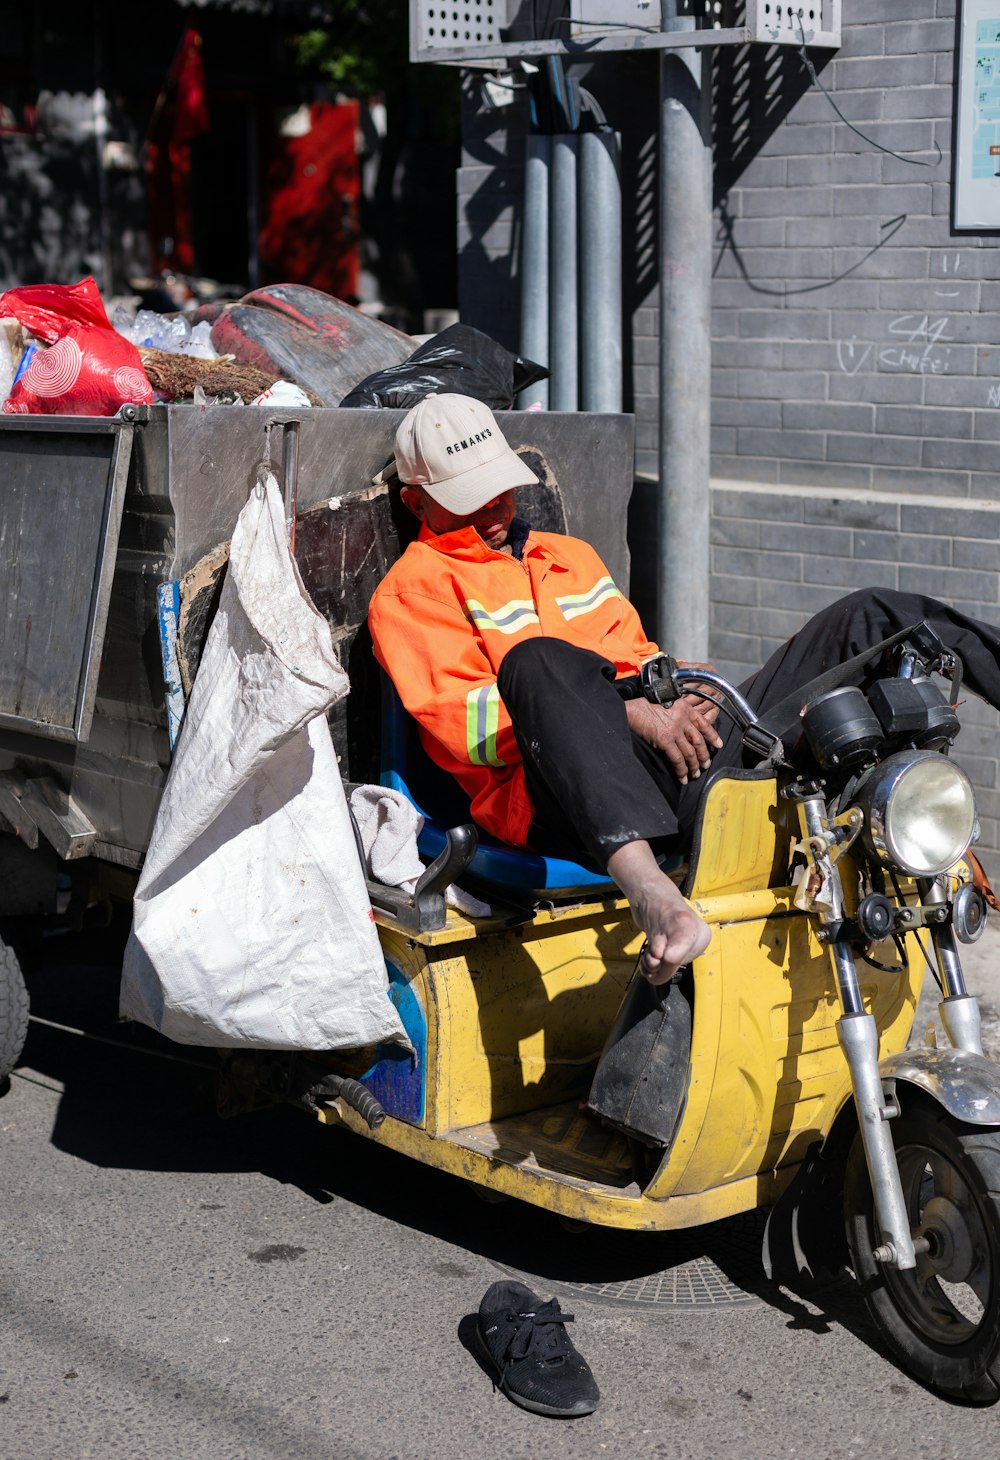 man in orange and white jacket sitting on yellow motorcycle during daytime